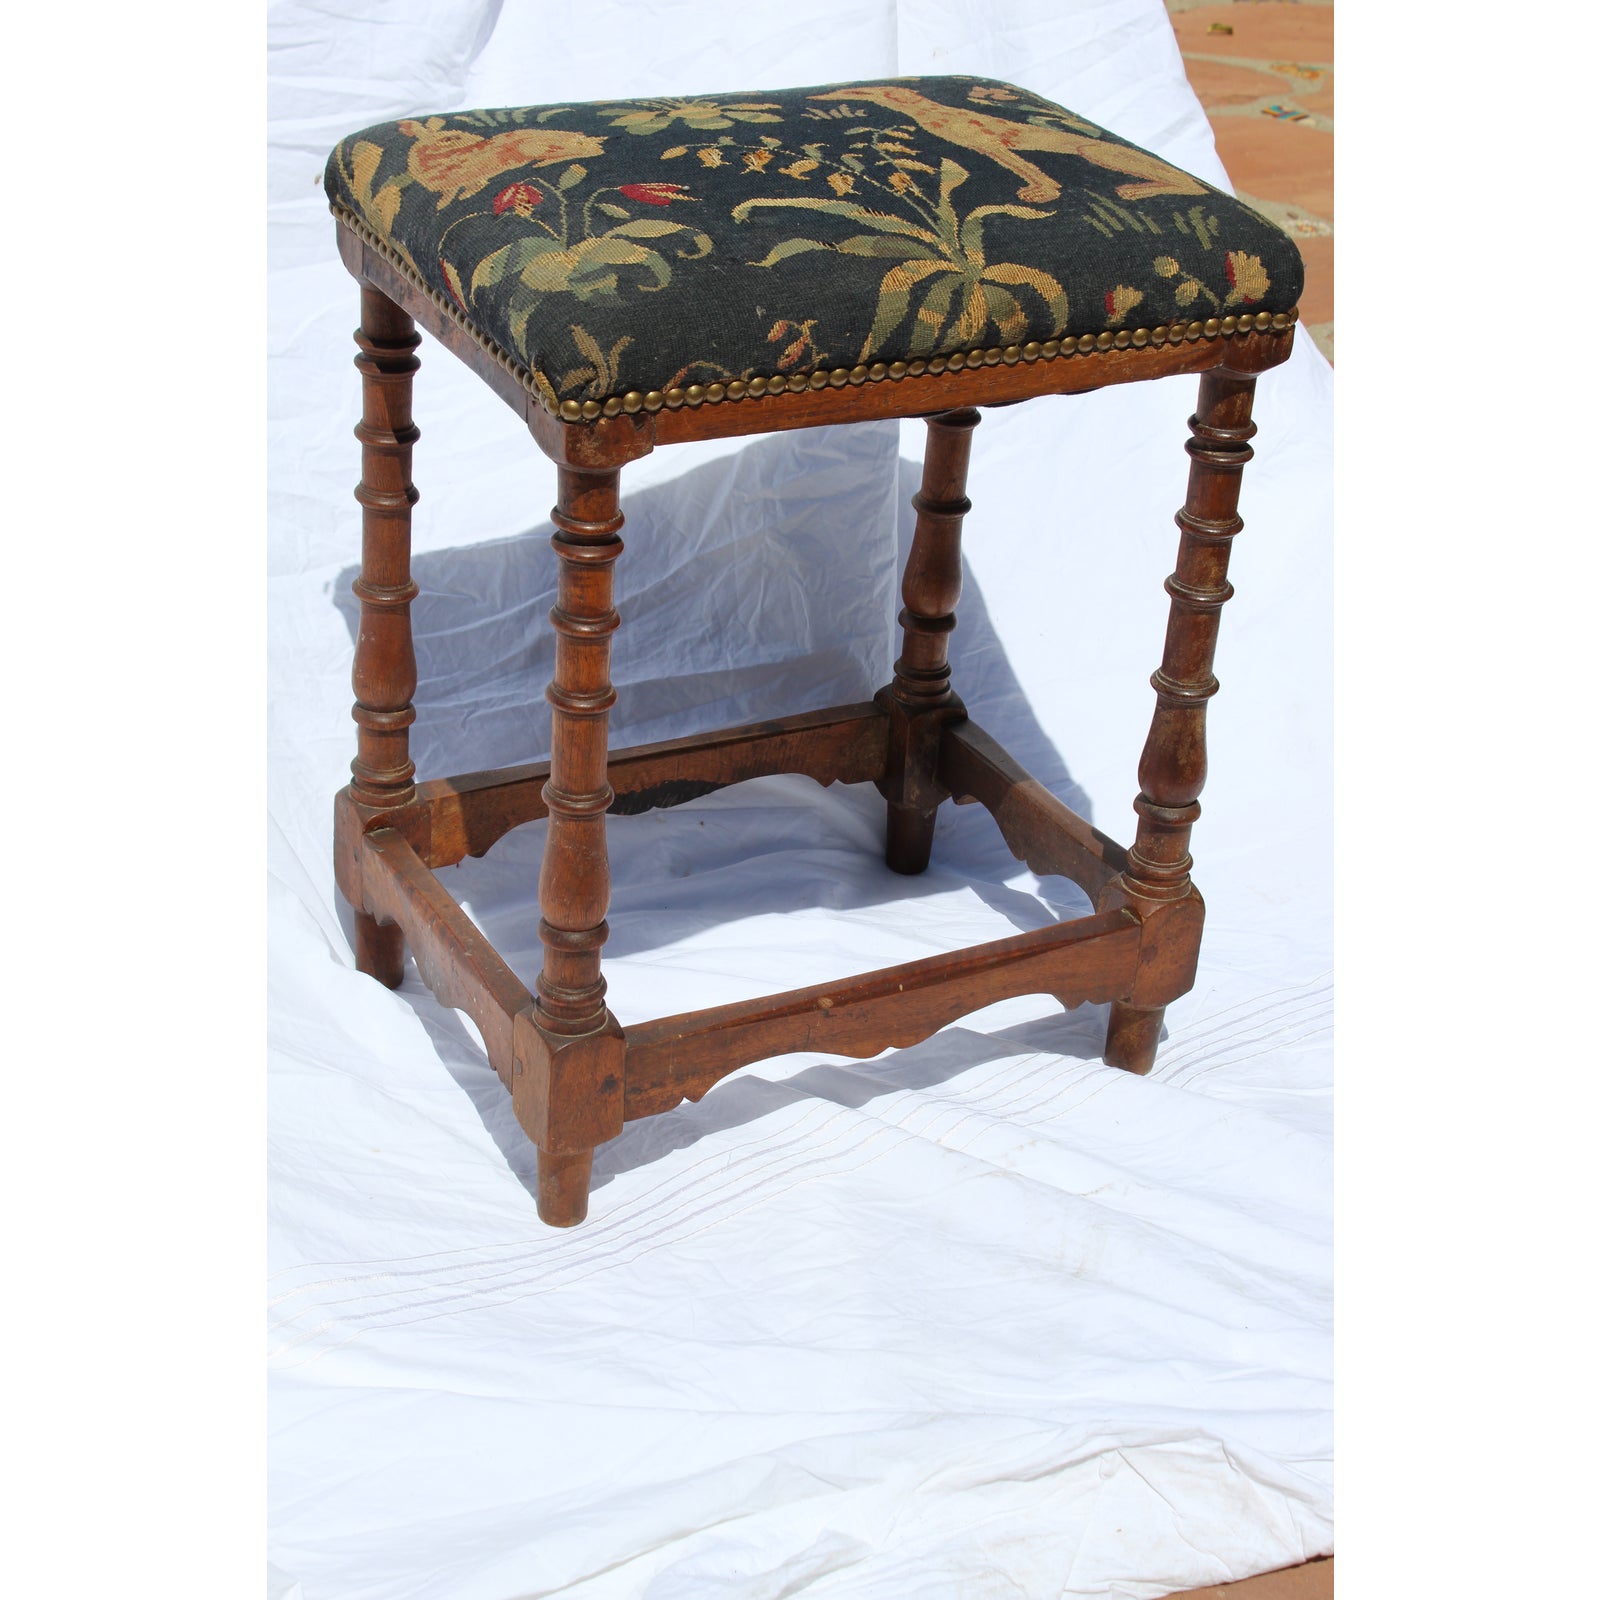 17th-century-french-needlepoint-stool-2788